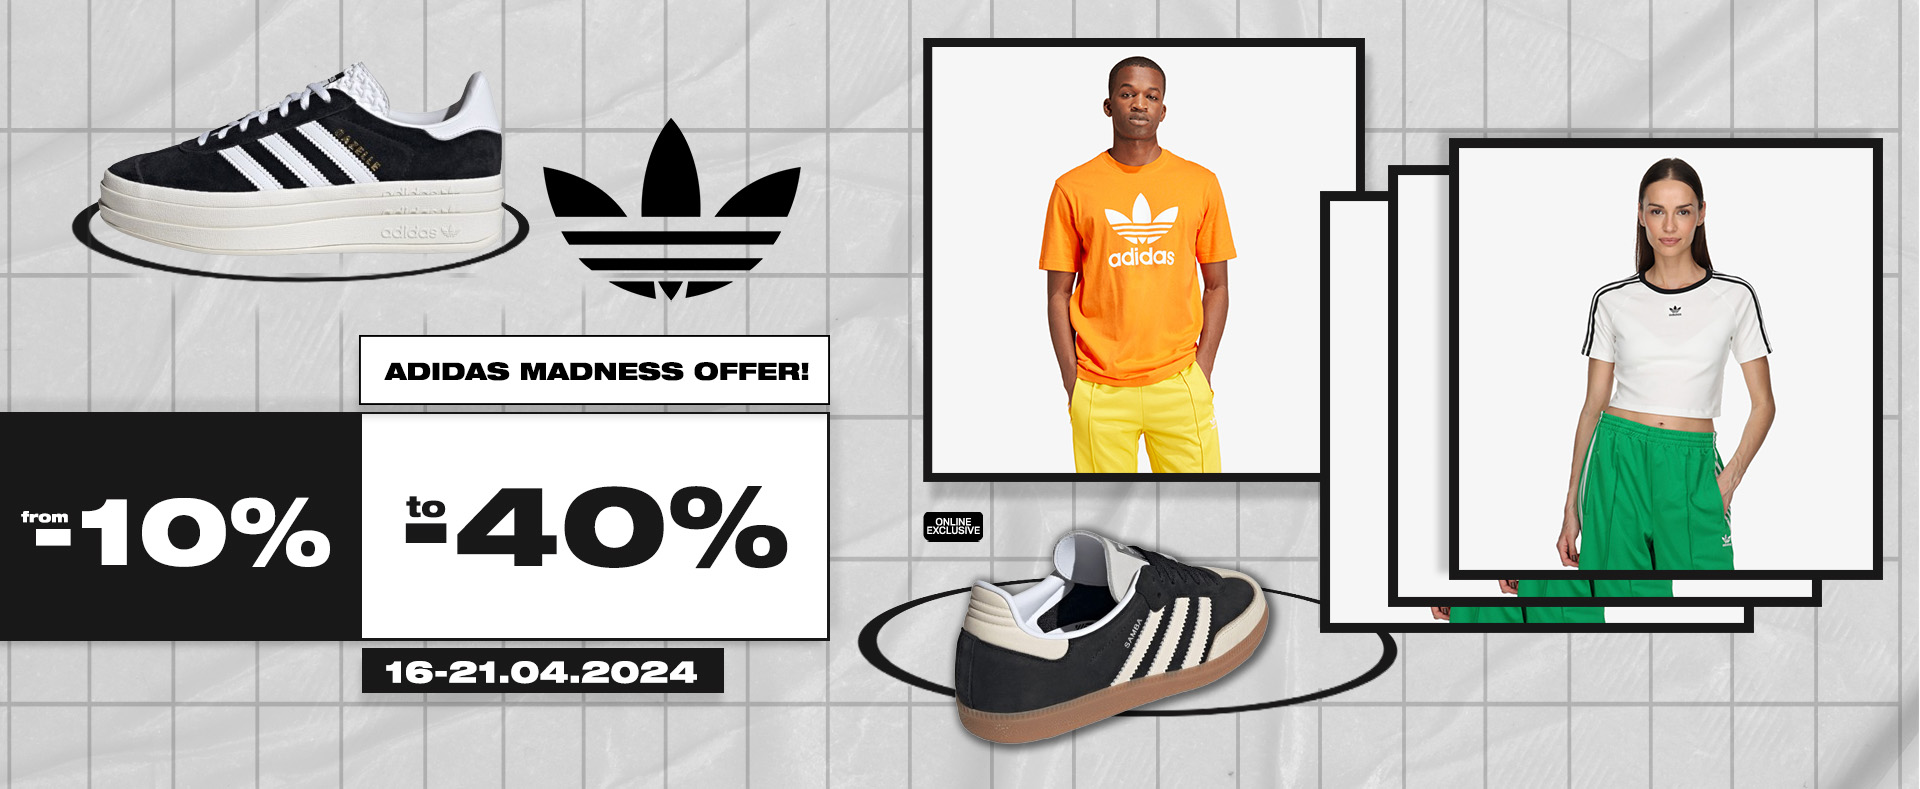 Adidas Promo up to -40%